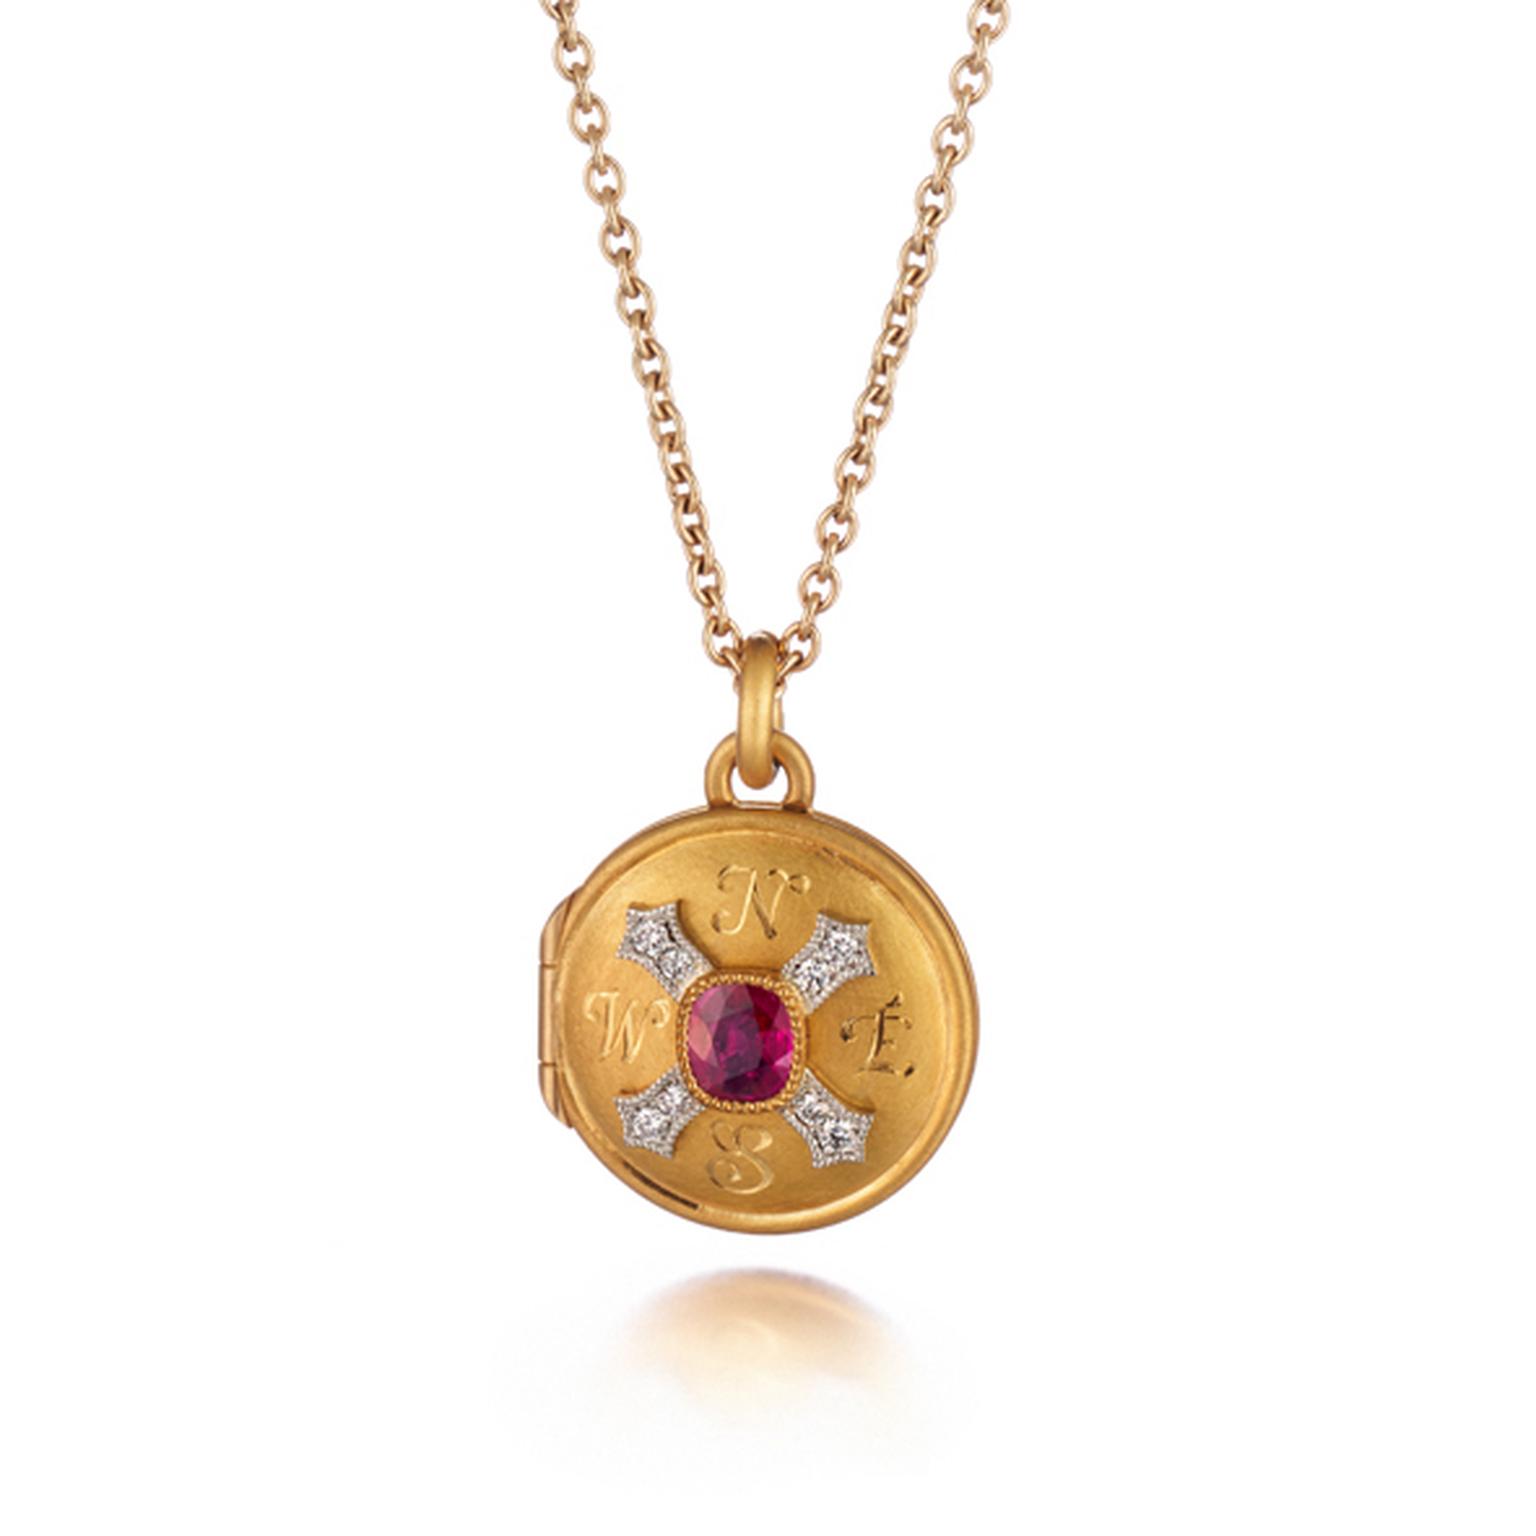 Medallion necklace by Kulmala